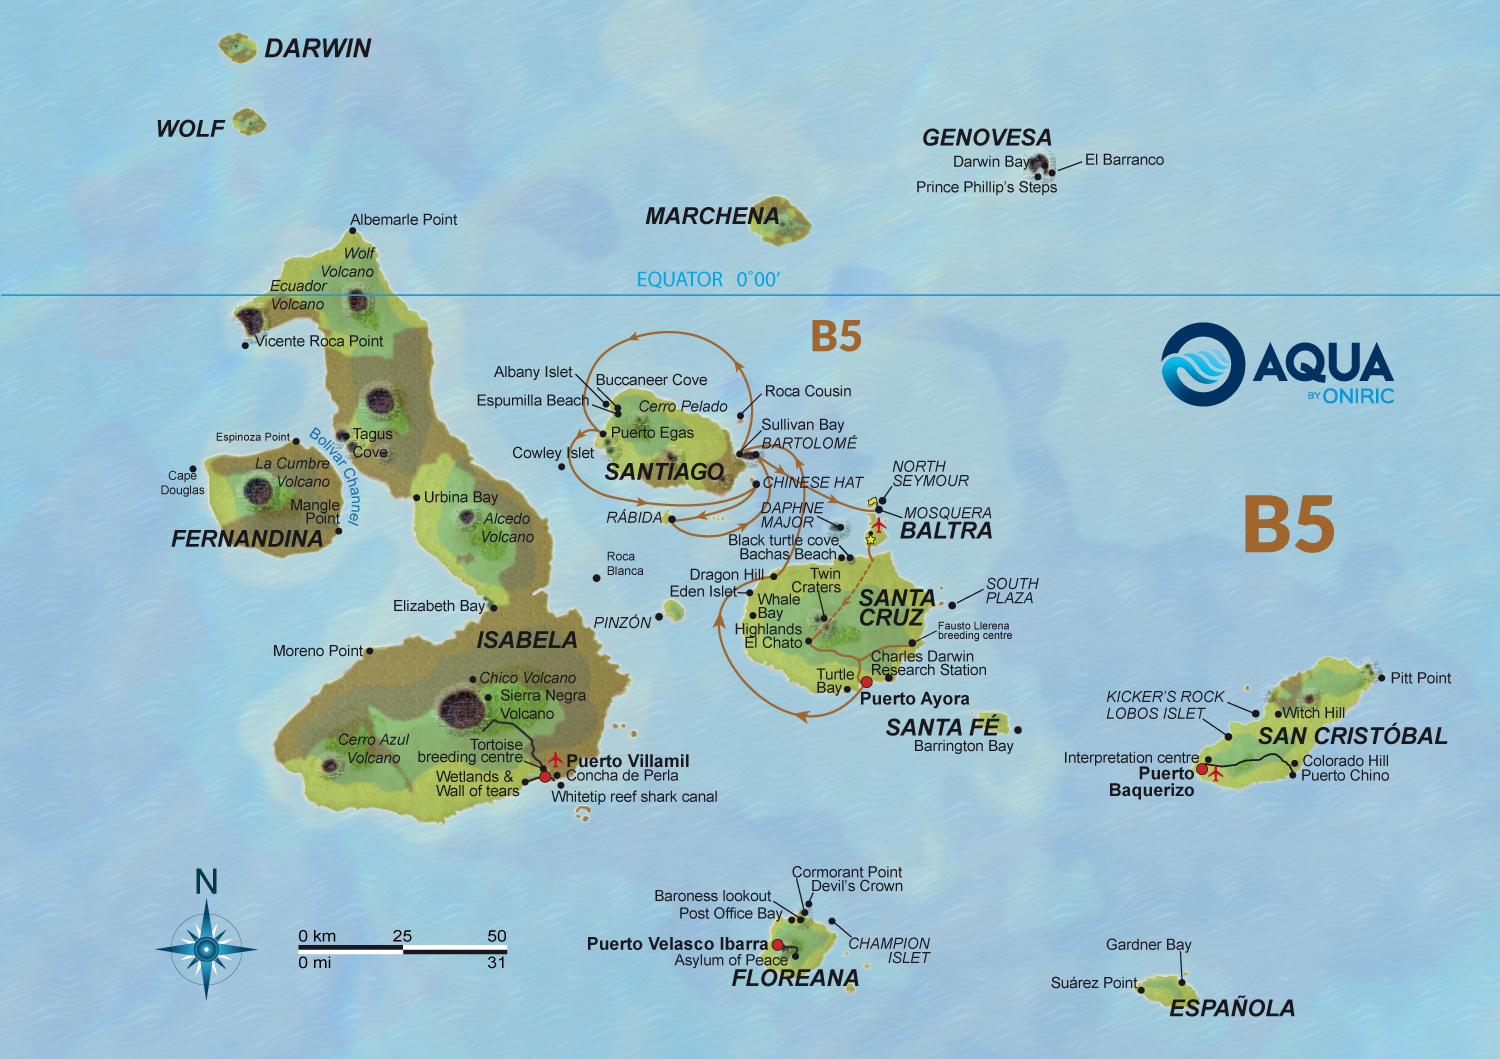 naturalist-route-b5-Galapagos-Ecuador-Oniric-Safe-travels-Aqua-yacht